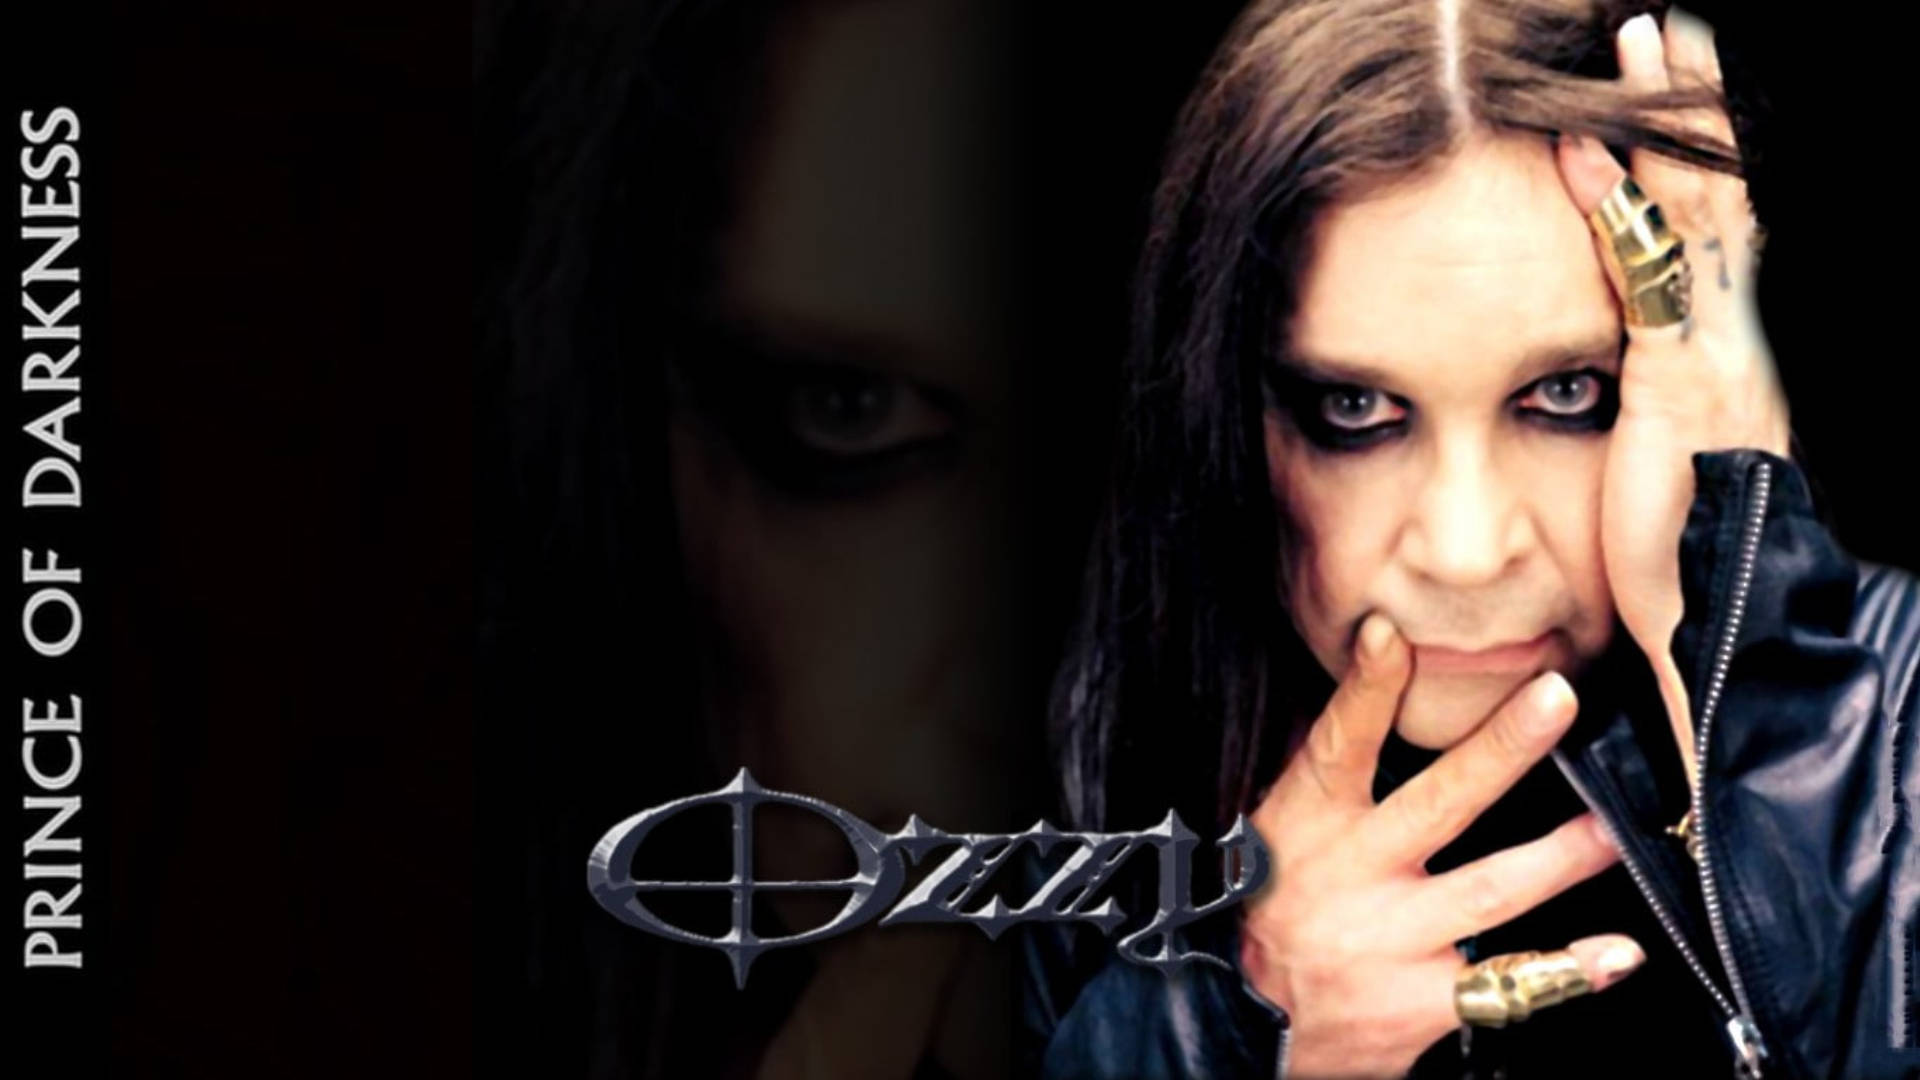 Ozzy Osbourne Prince Of Darkness Wallpaper